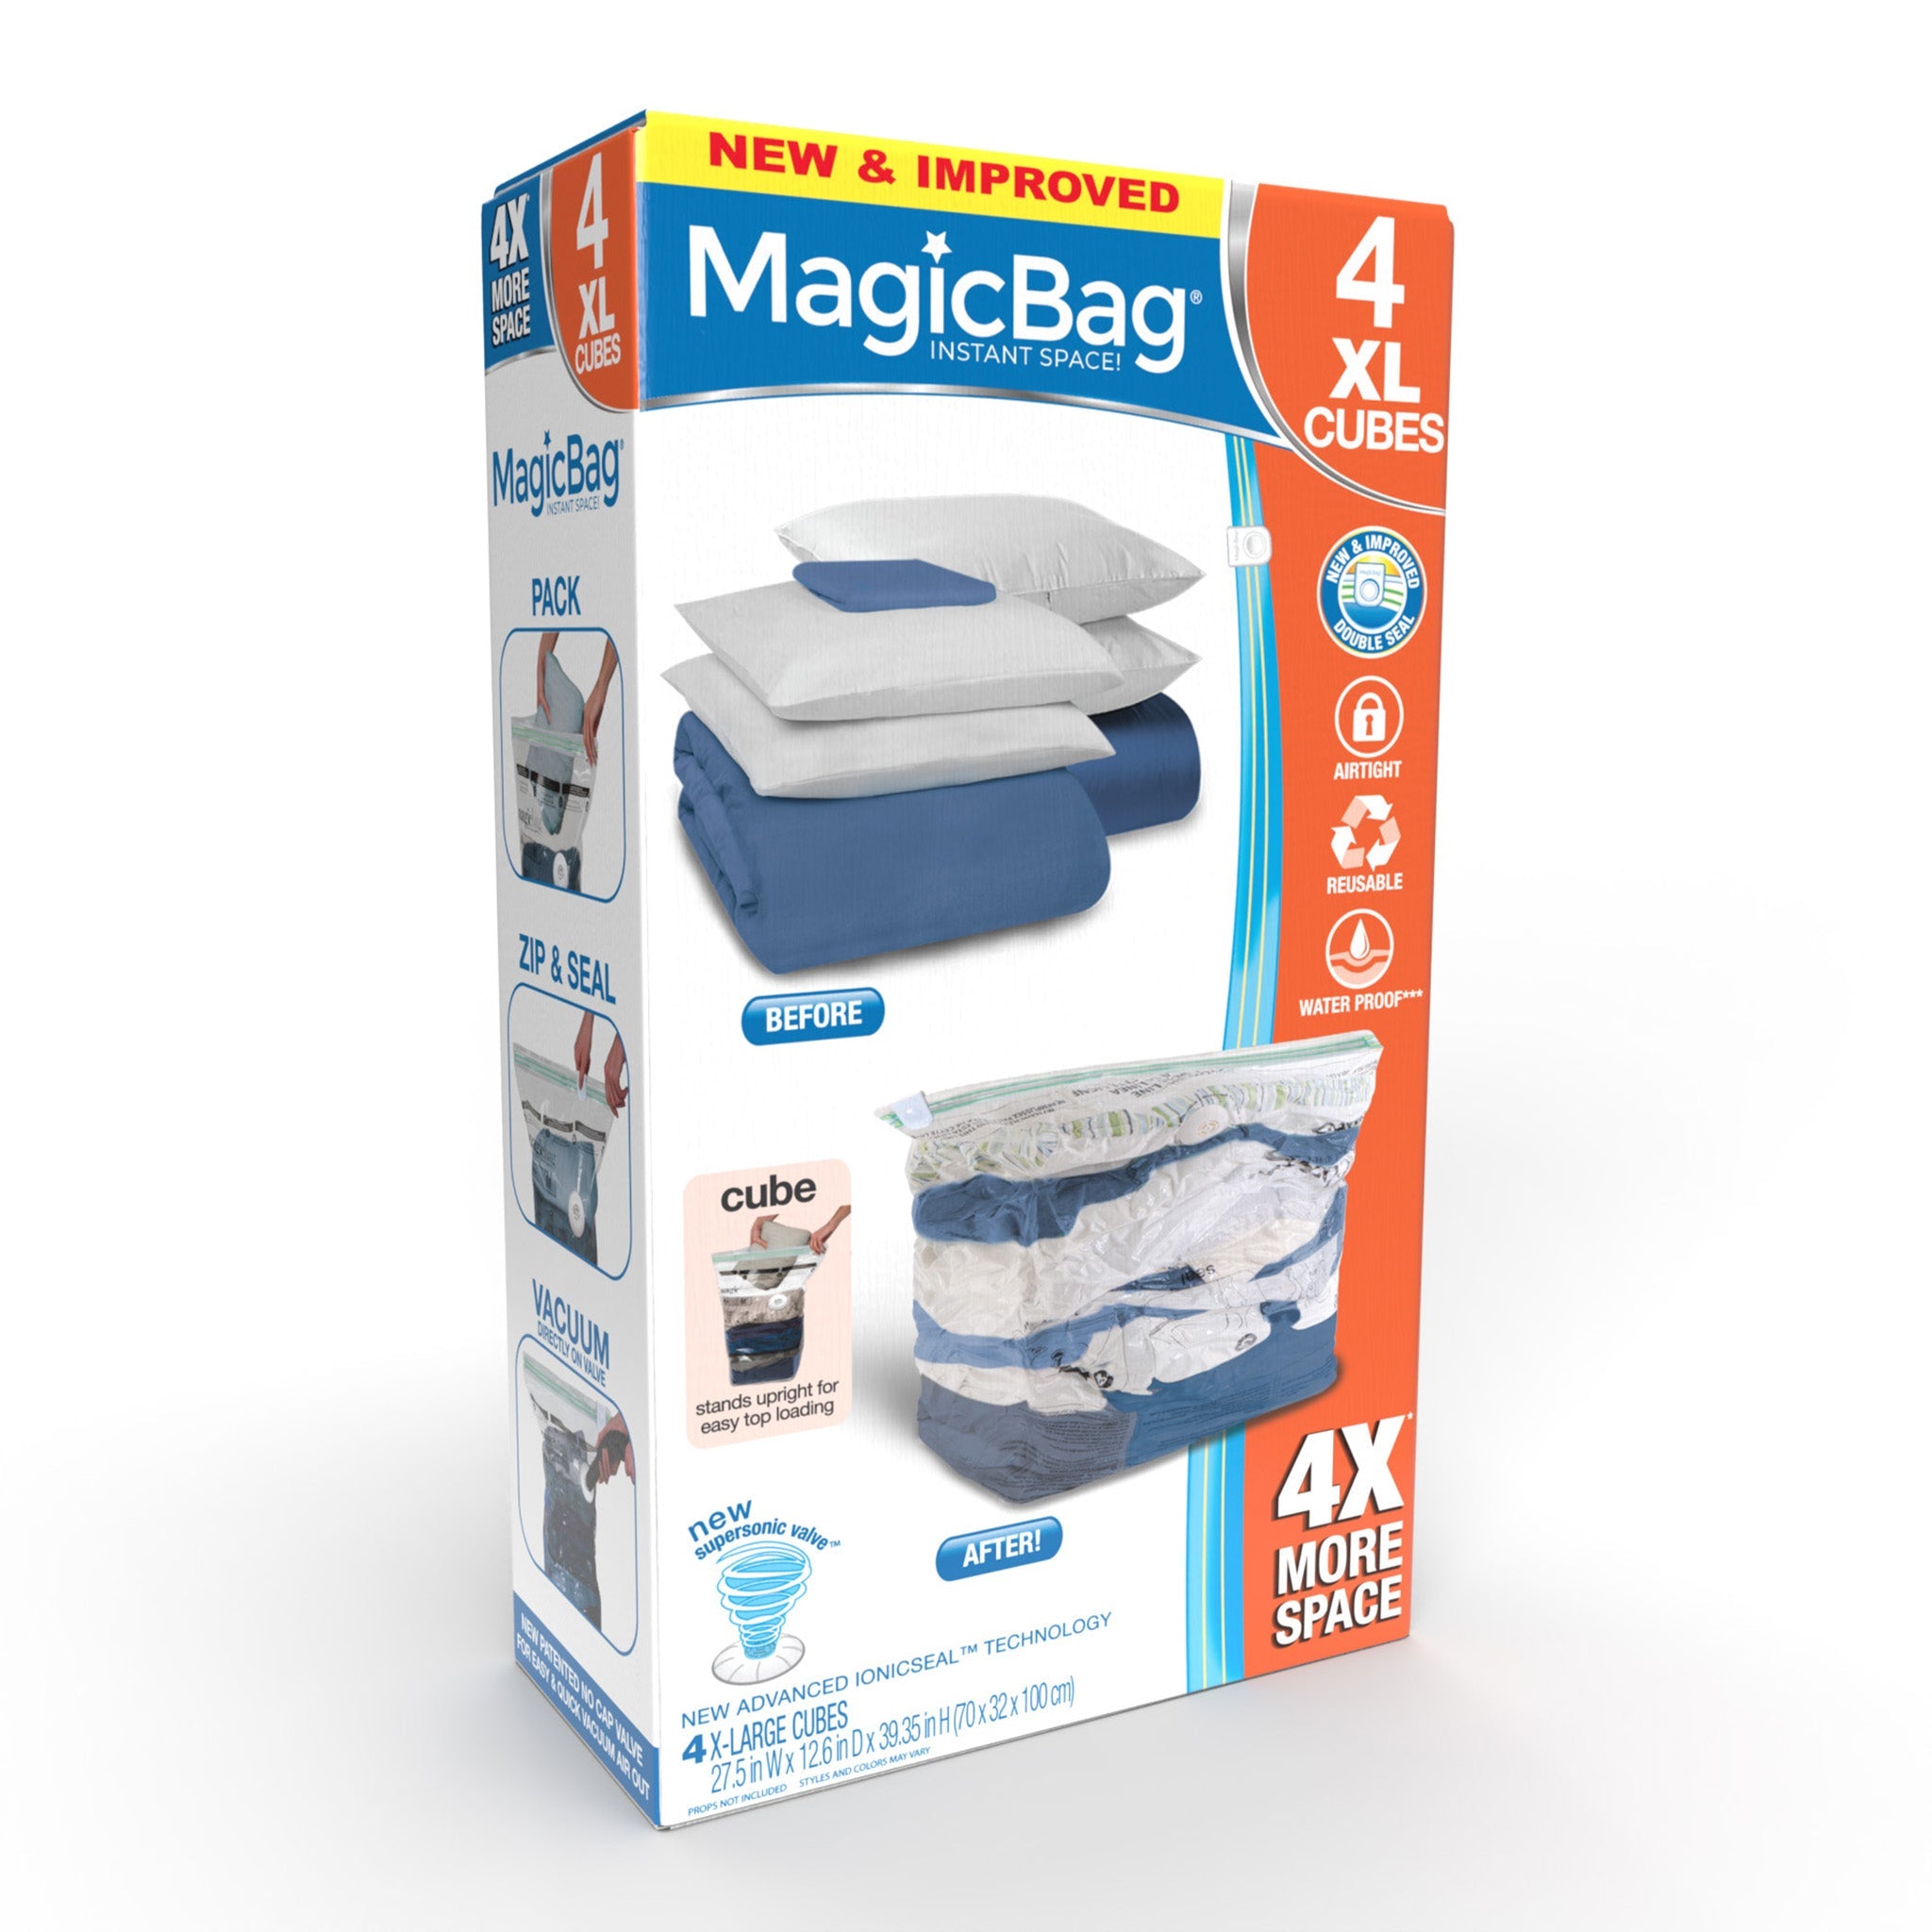 Magicbag Extra Large Flat Space Saver Bags